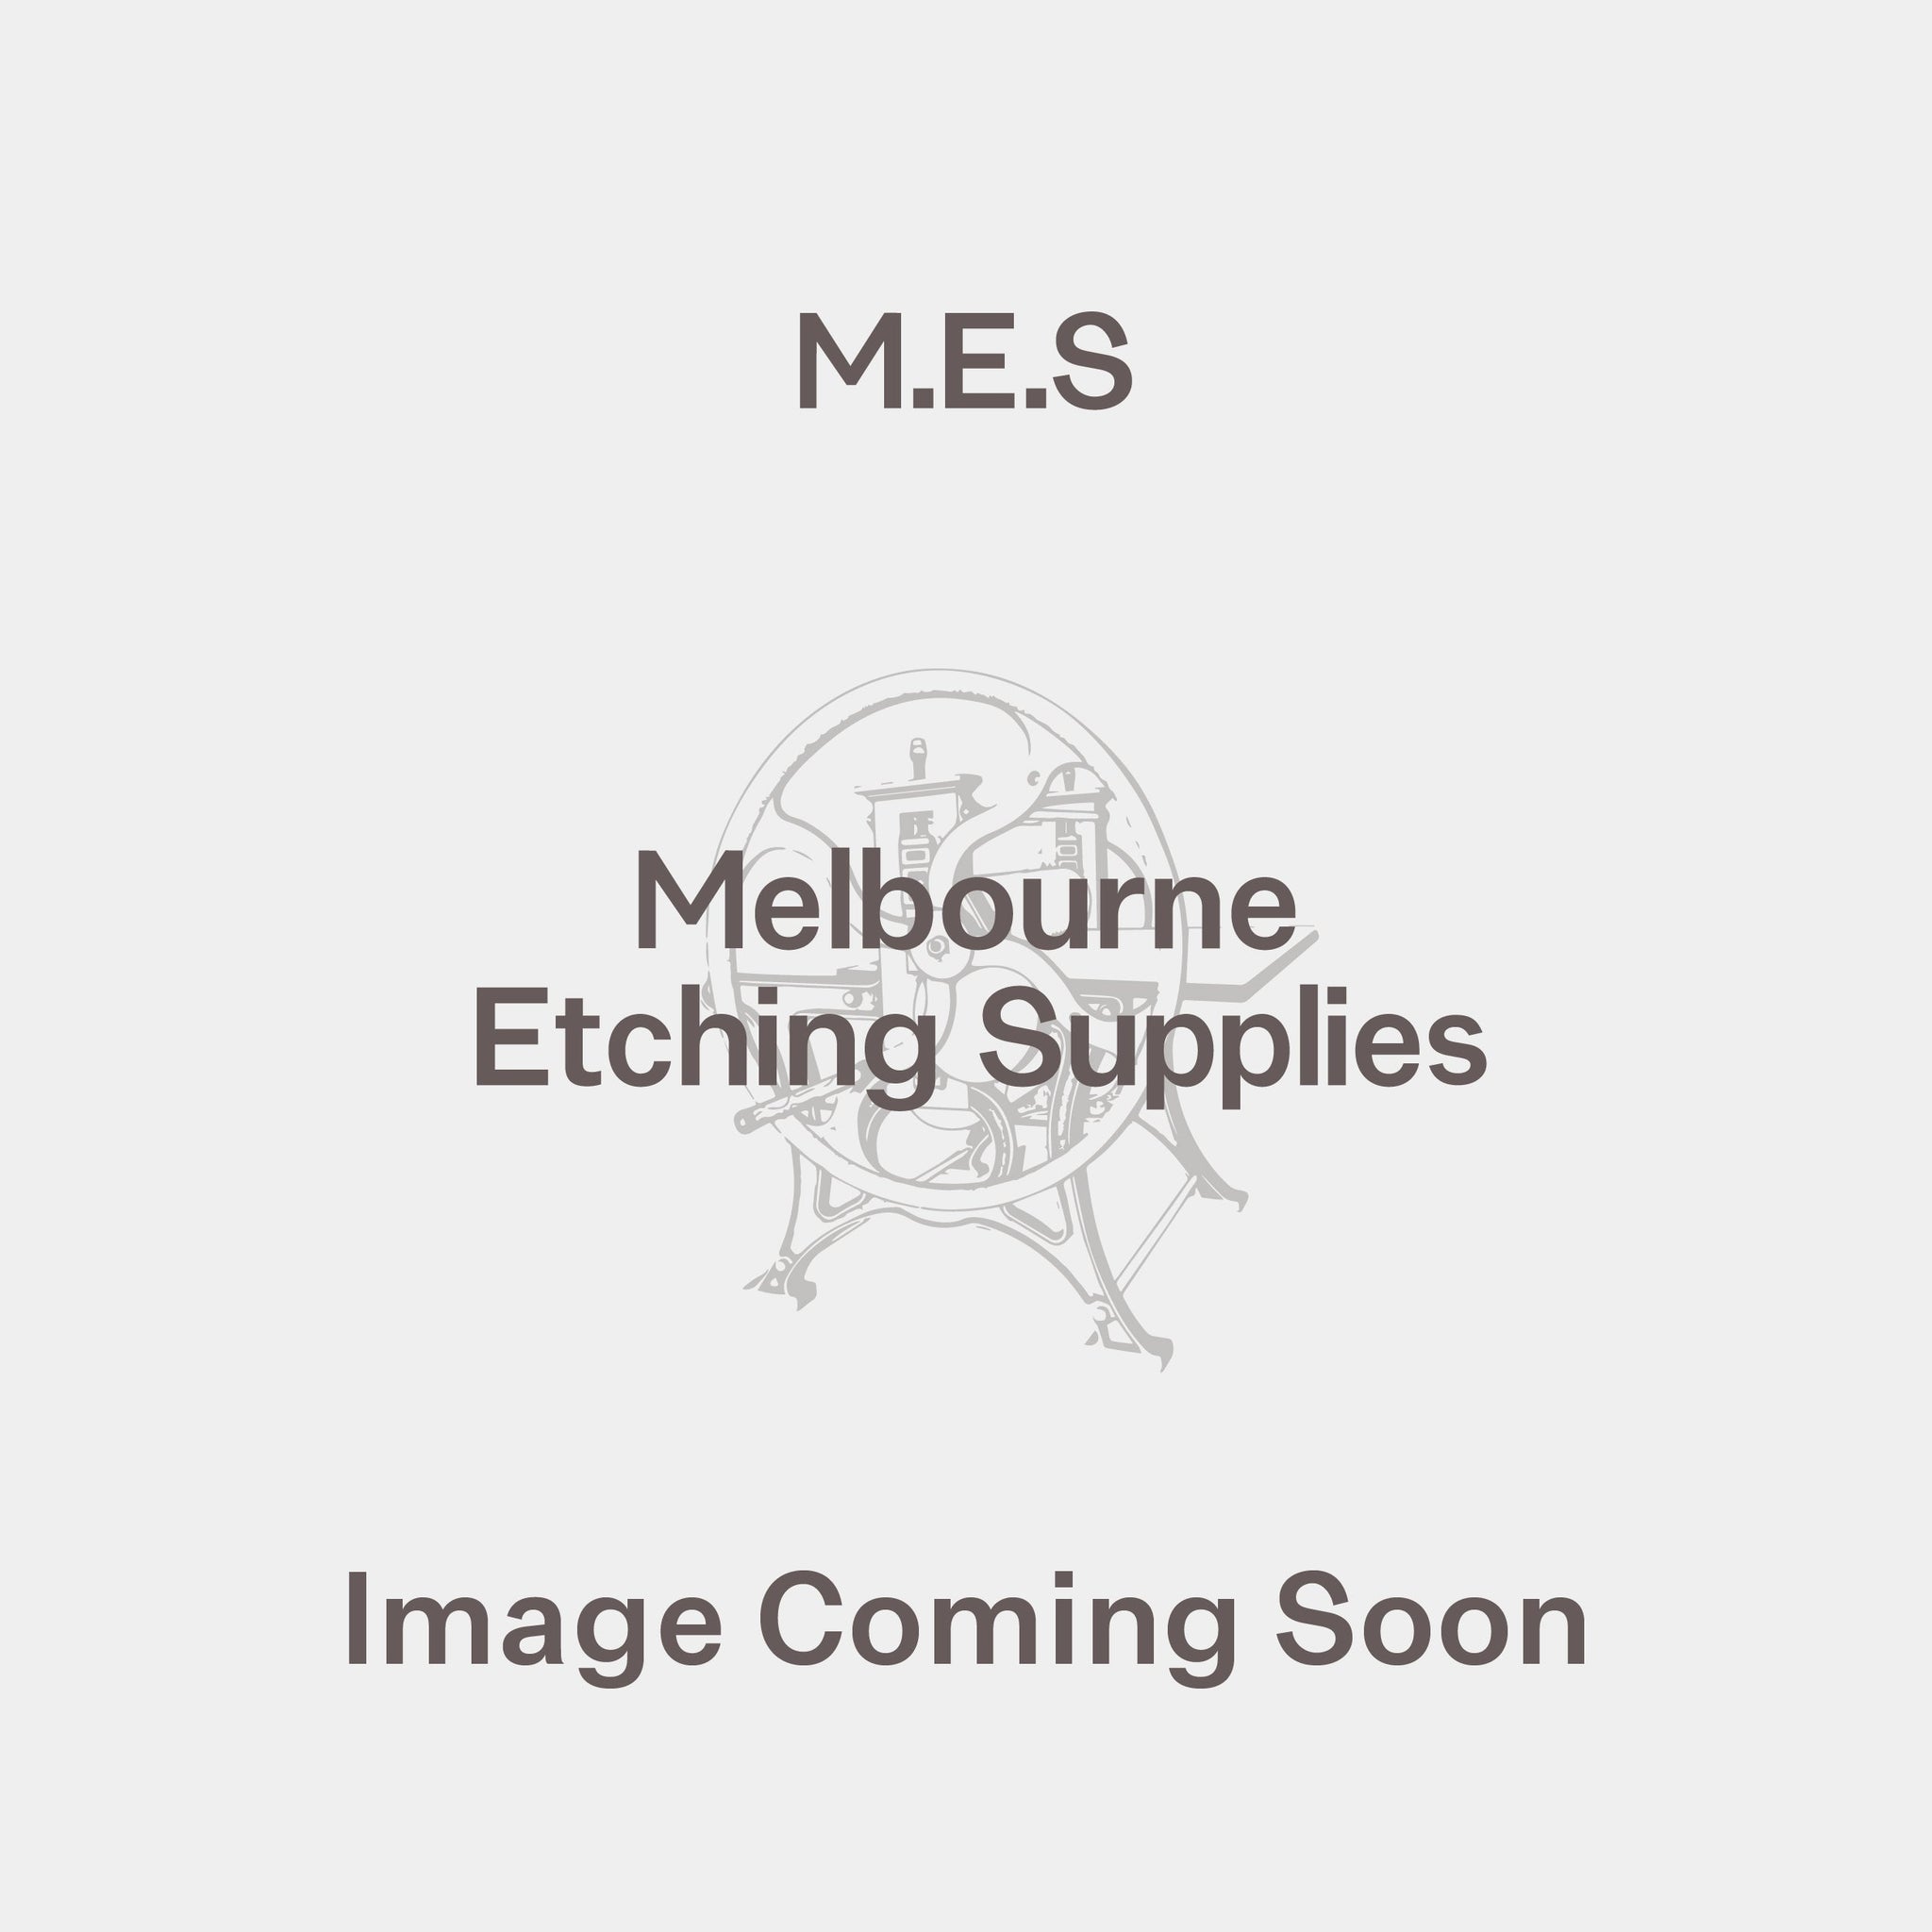 Somerset Enhanced Roll 255gsm - Melbourne Etching Supplies